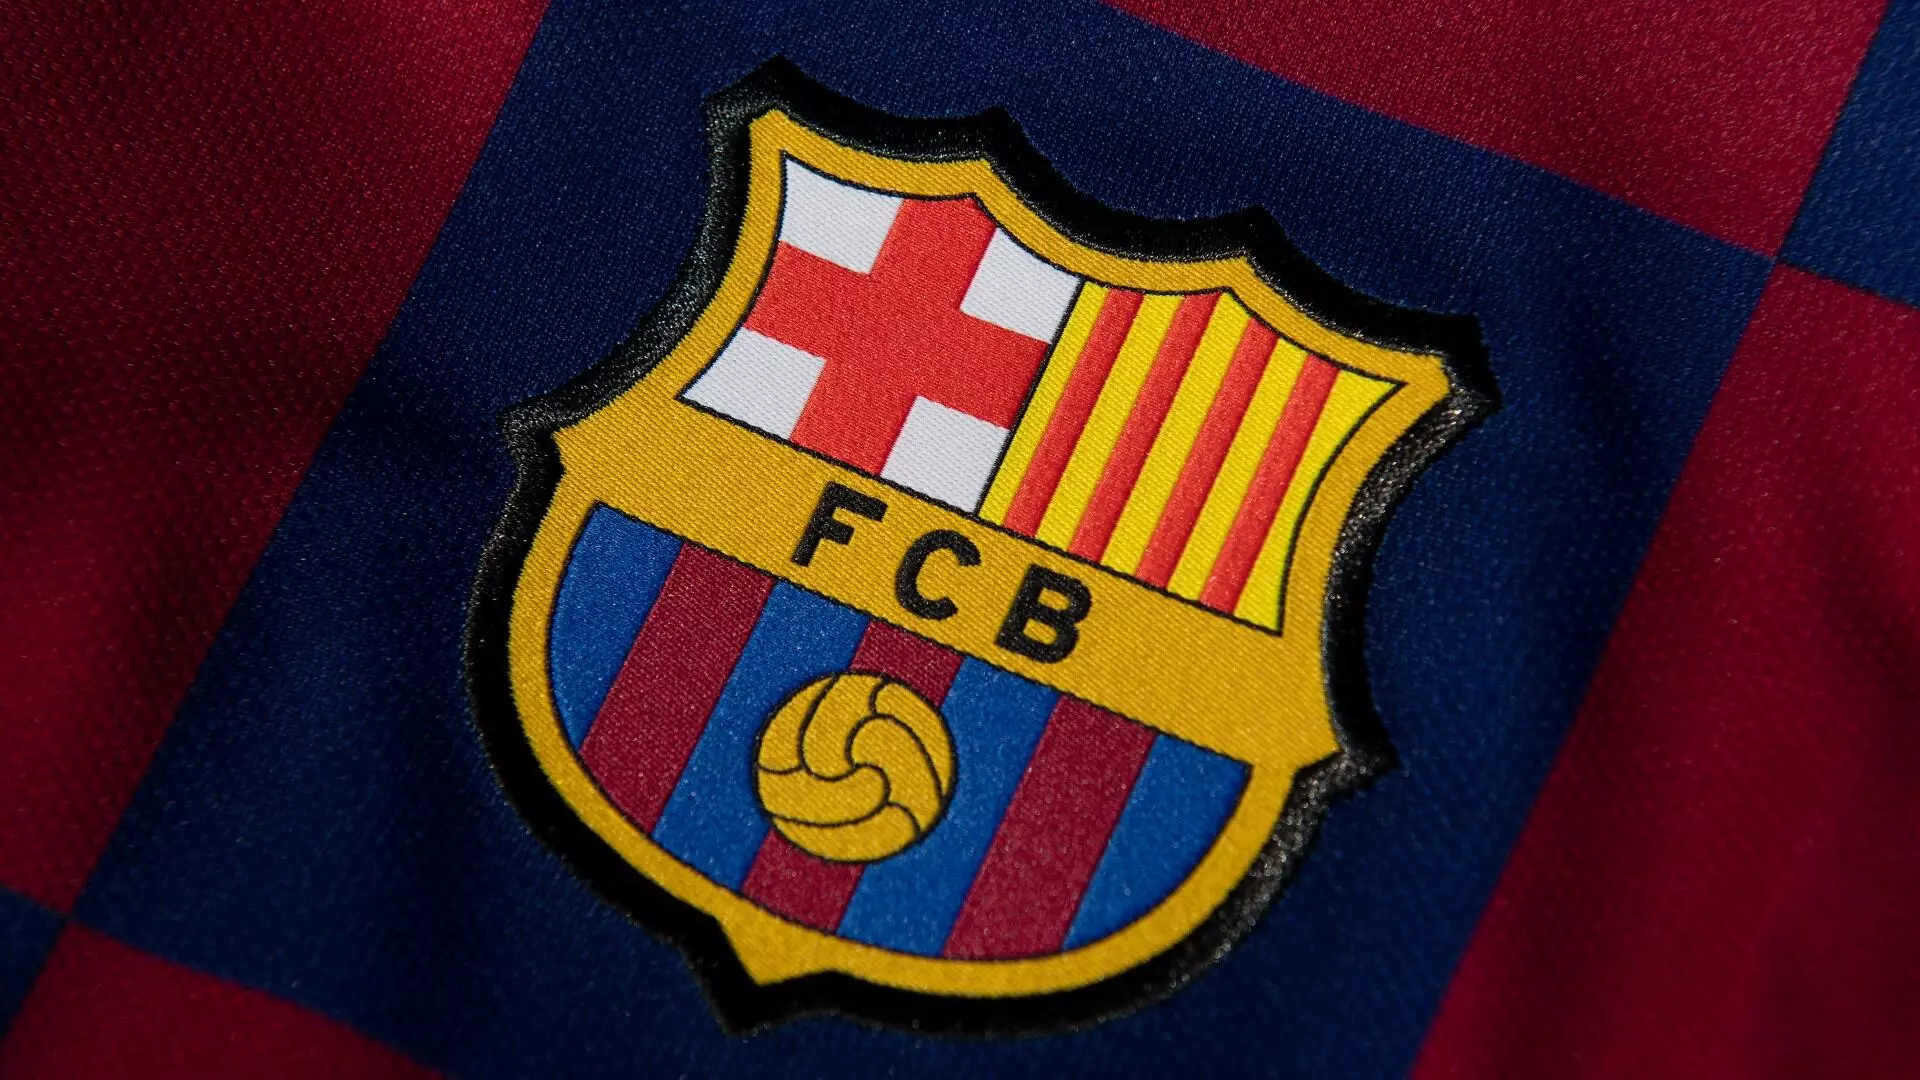 Barcelona FC obtain €1.45 bn for Camp Nou renovation